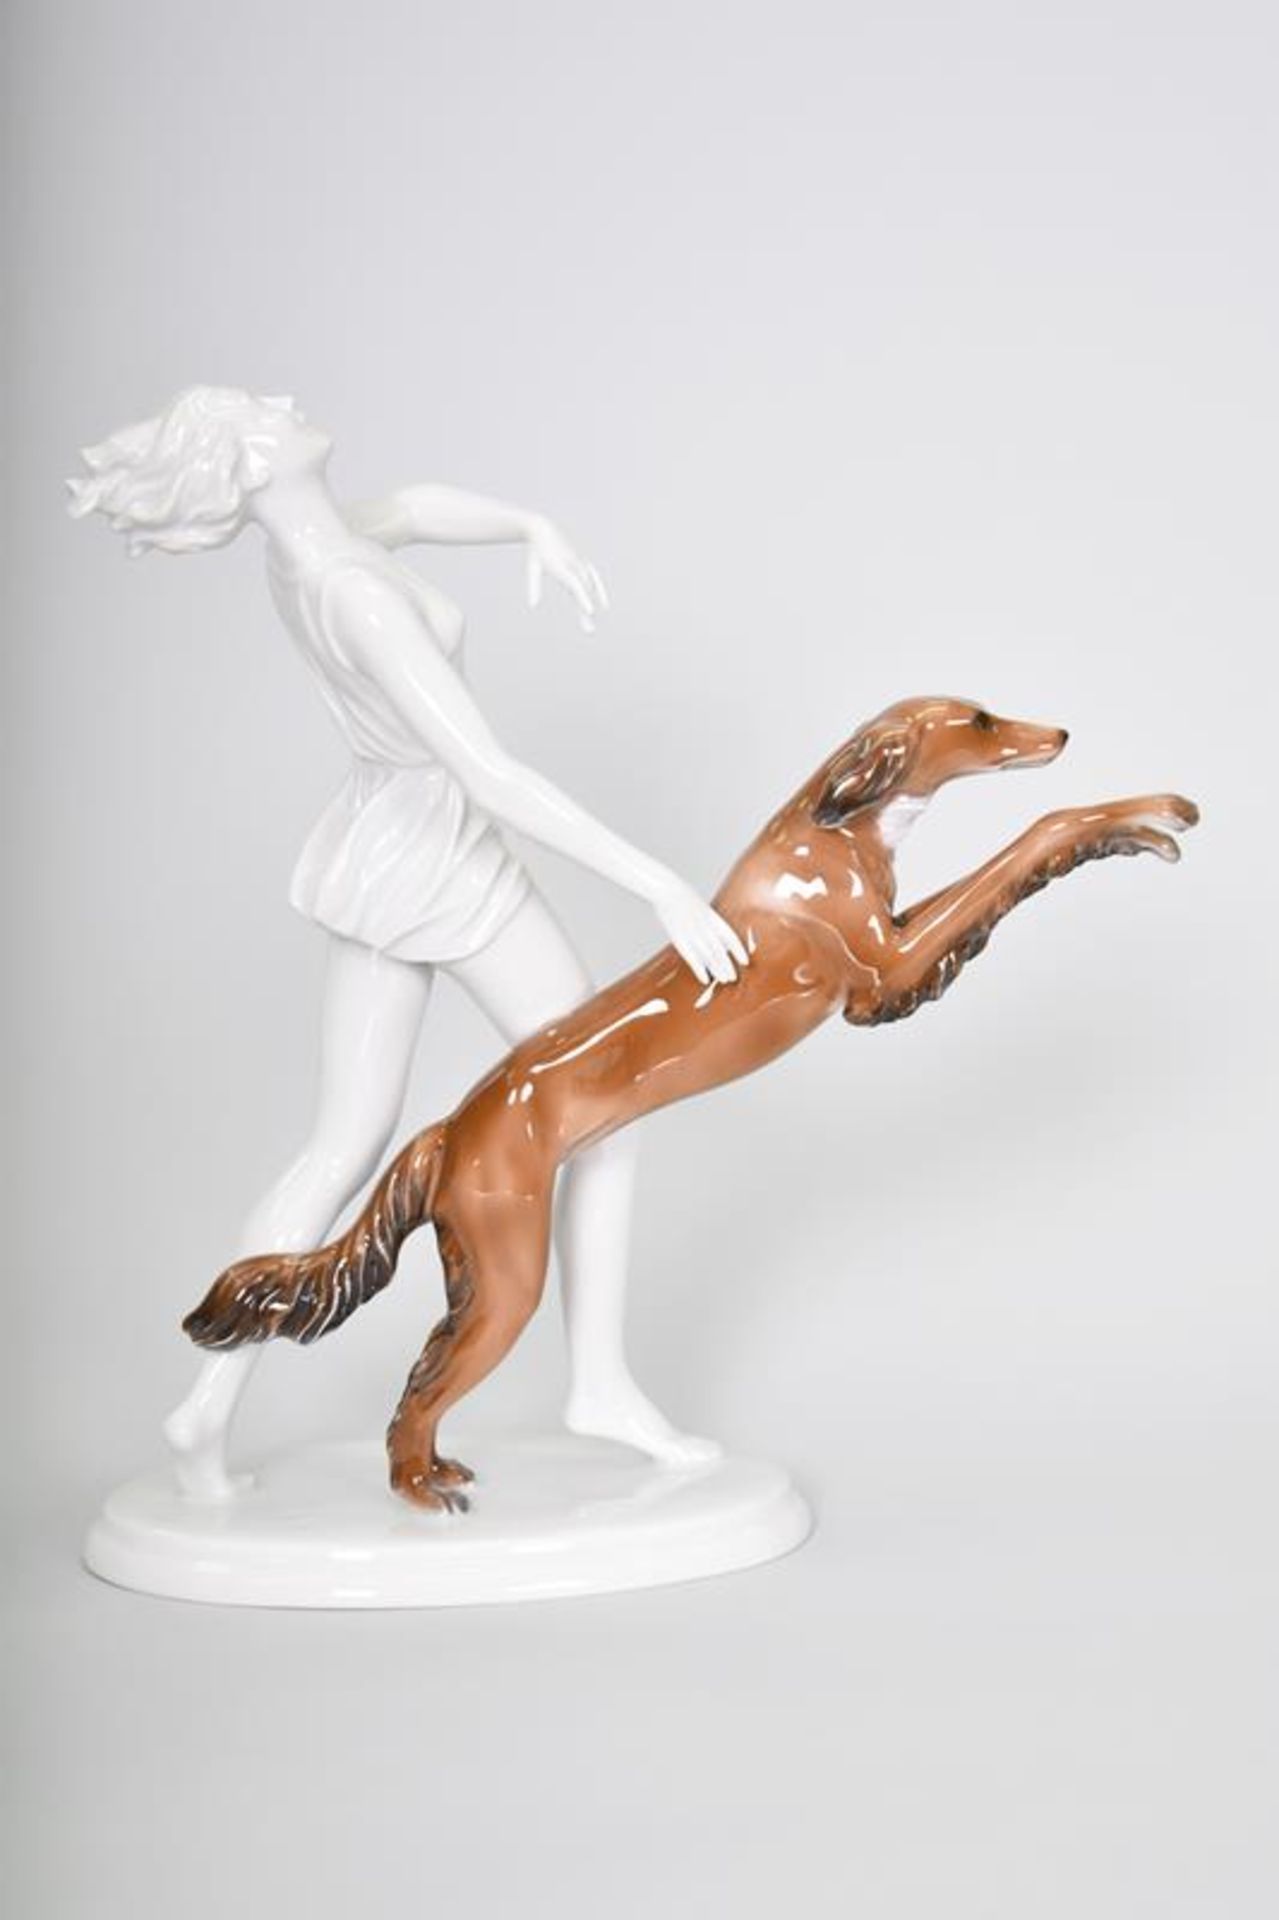 Rosenthal Porzellan Figur "G.Oppel"Mindestpreis 250Bezeichnung Rosenthal Porzellan Figur "G.Oppel" - Bild 2 aus 4